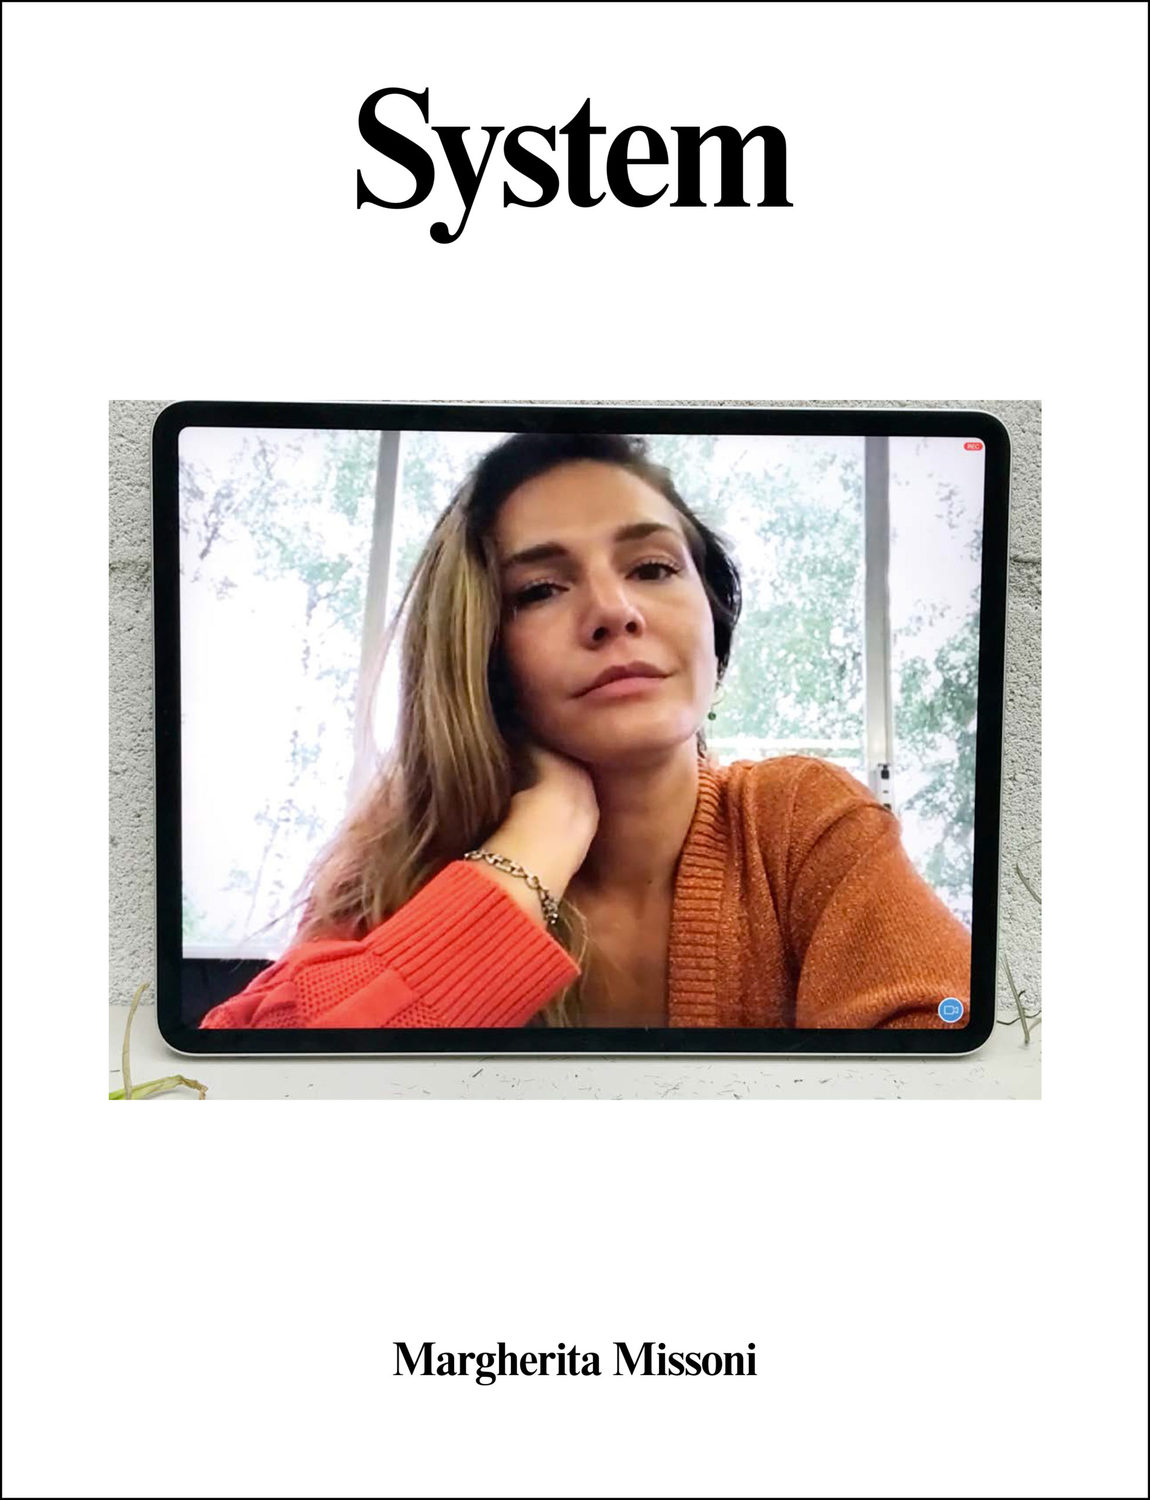 SYSTEM15-COVER-Margherita-Missoni-scaled.jpg